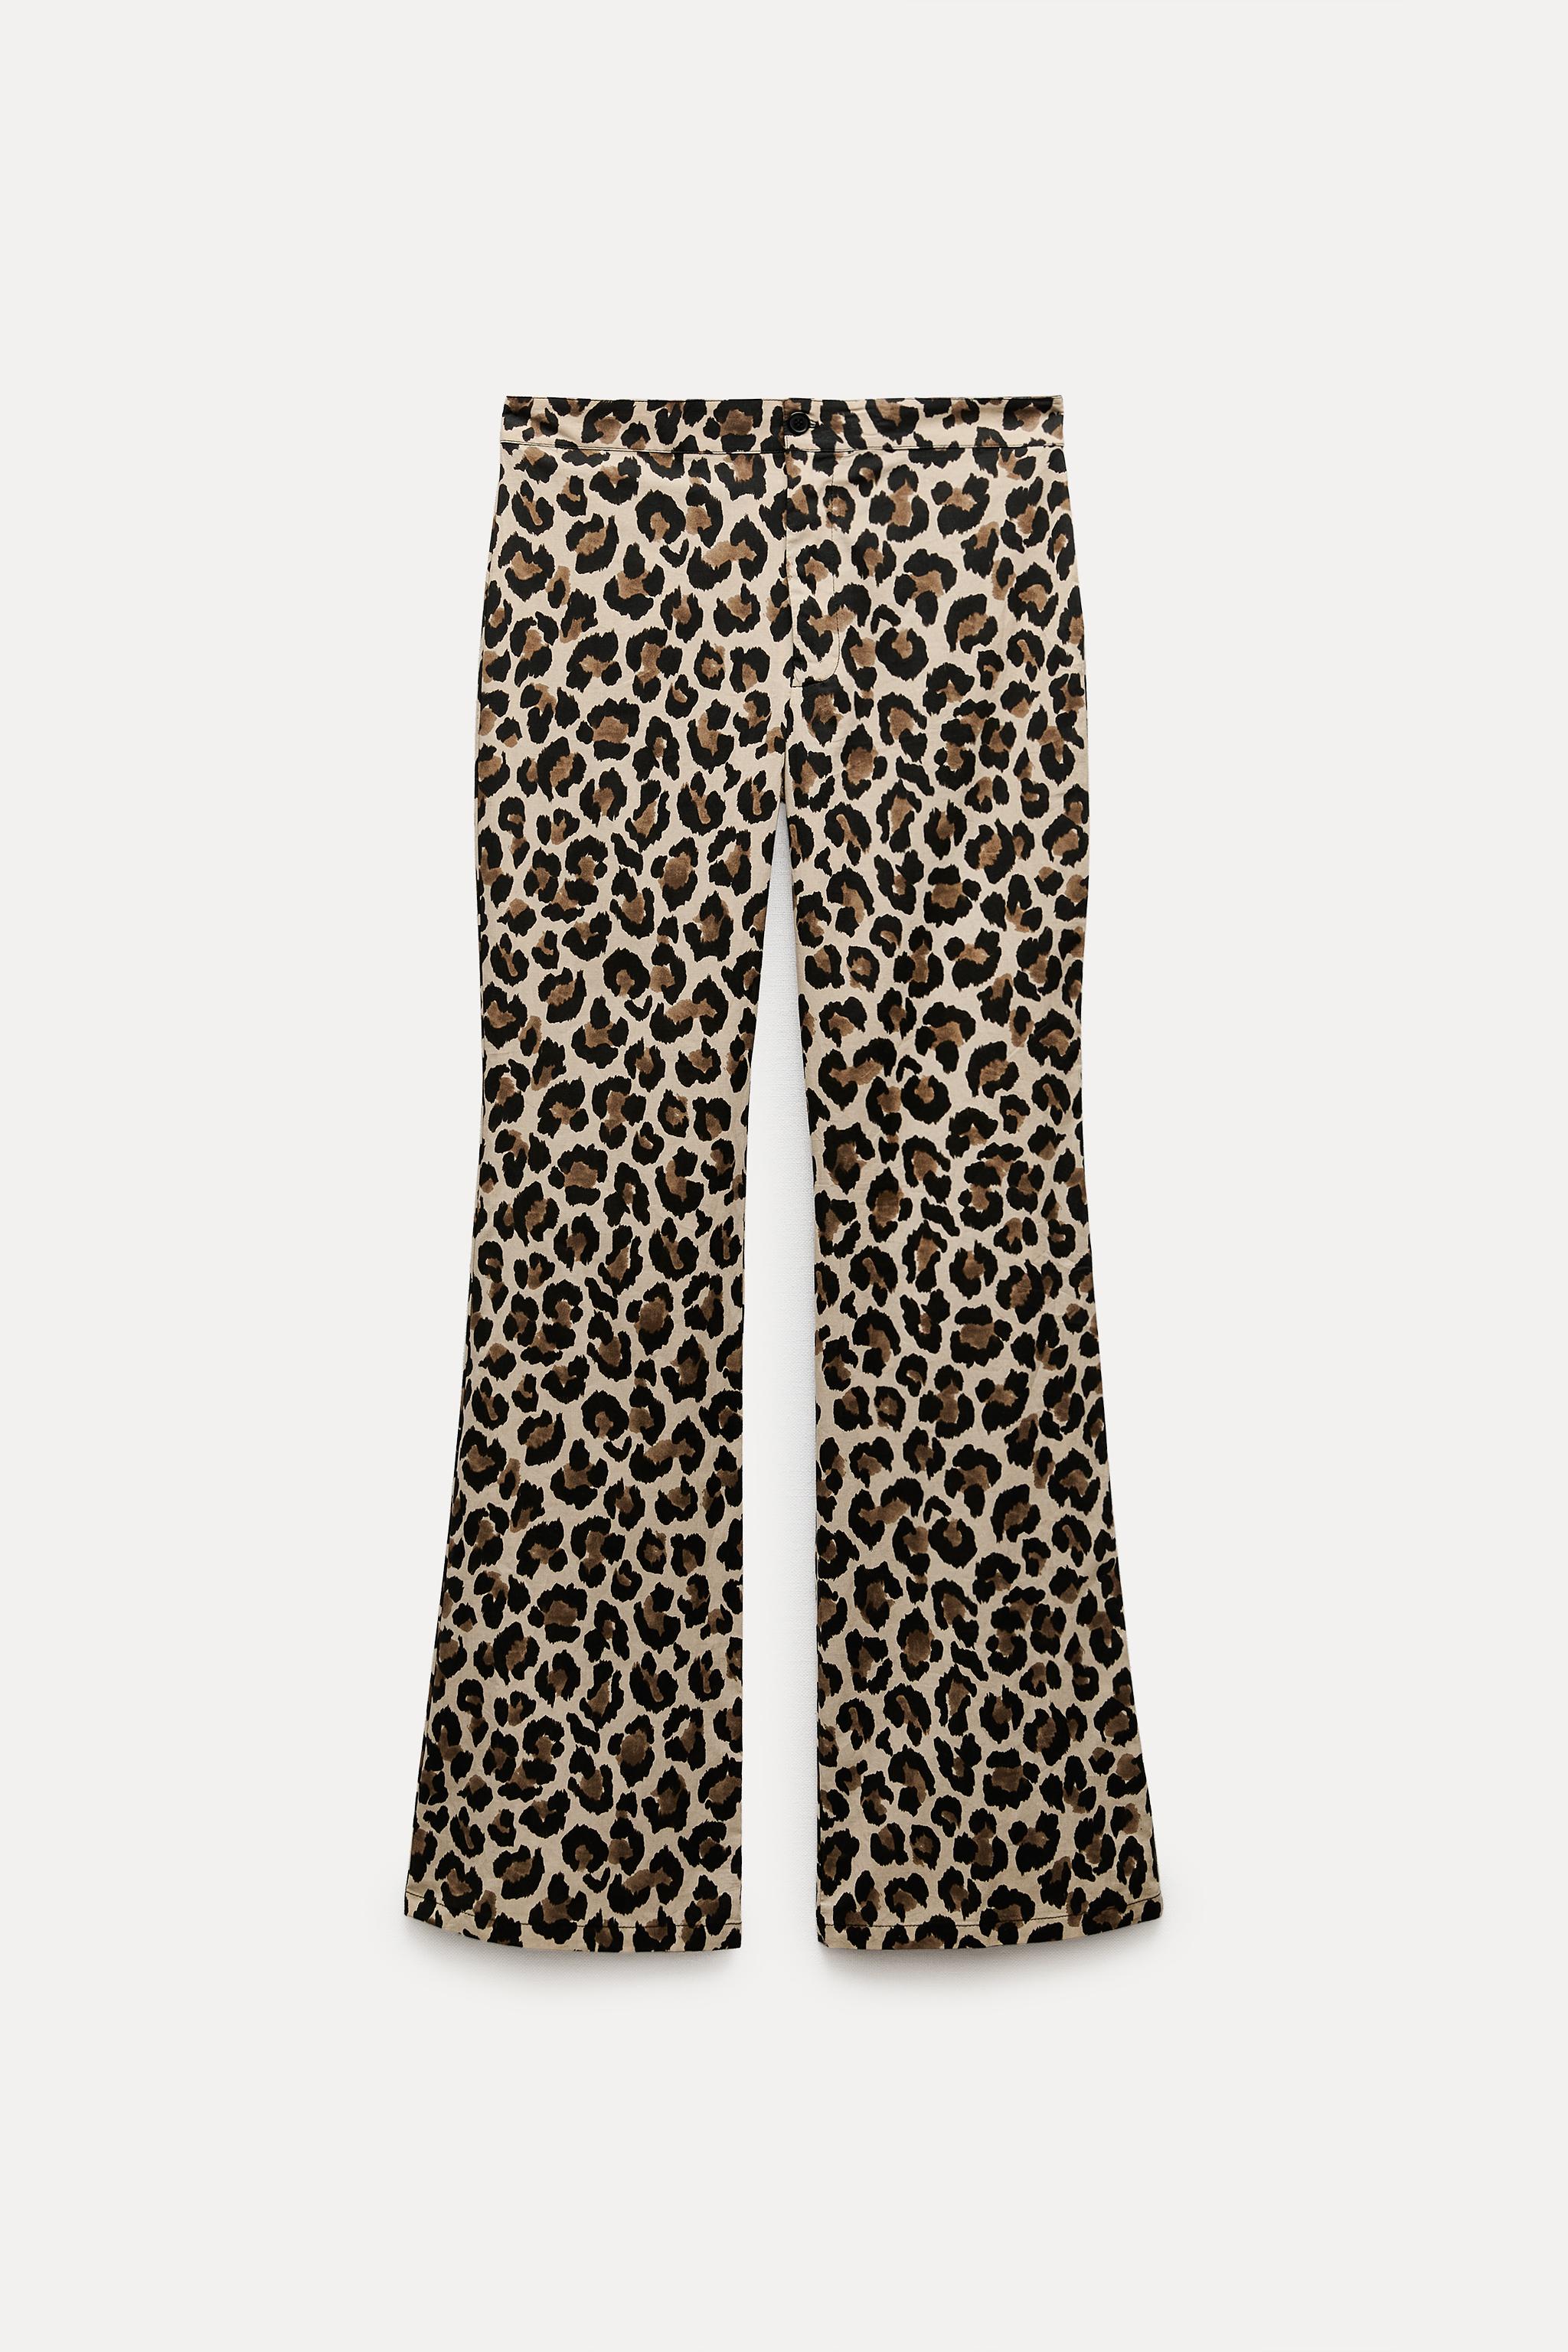 Pants (Animal print) for women, Buy online